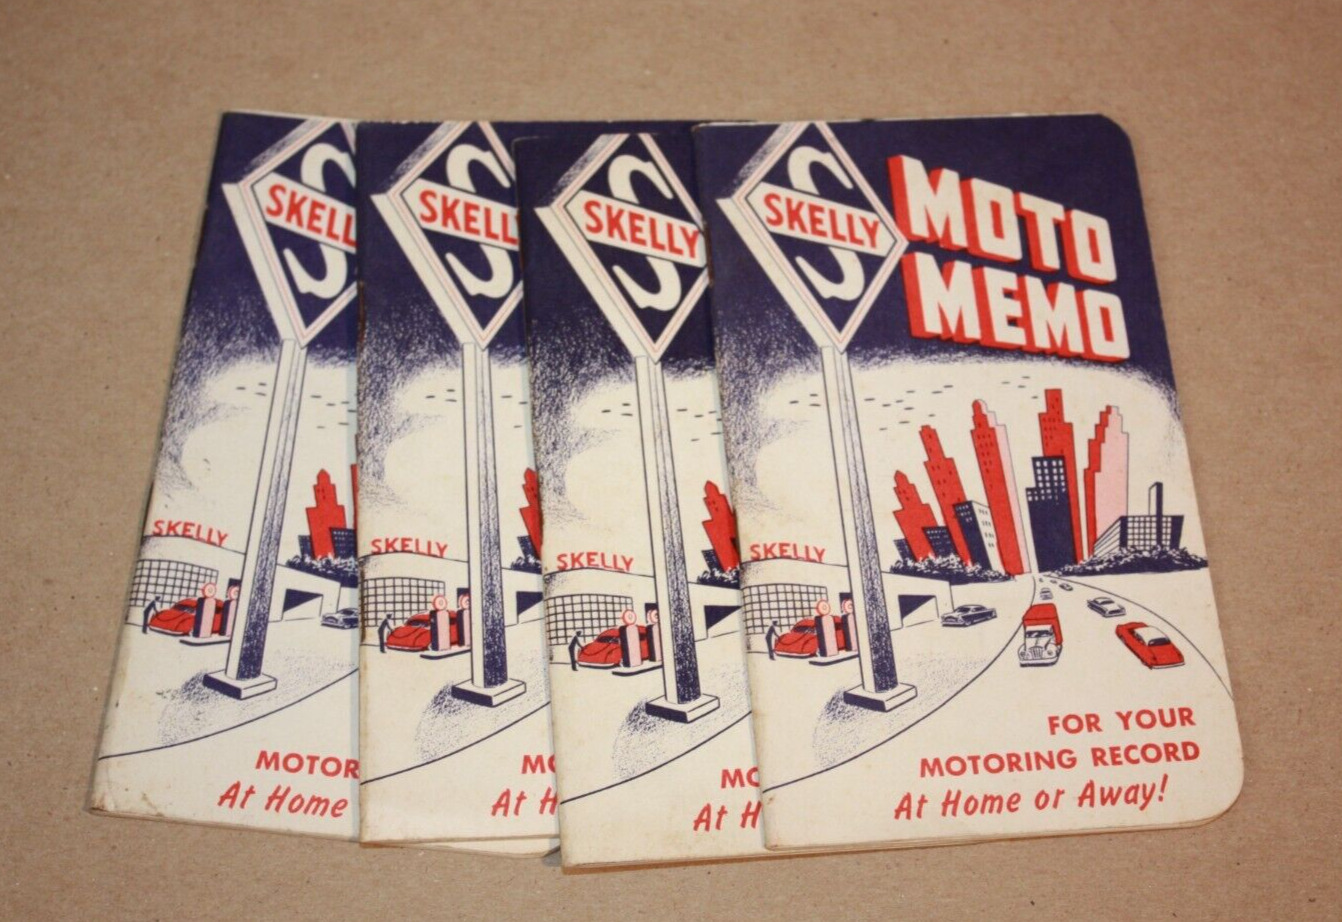 4 Vintage Skelly Automobile Service Station Moto Memo Booklets